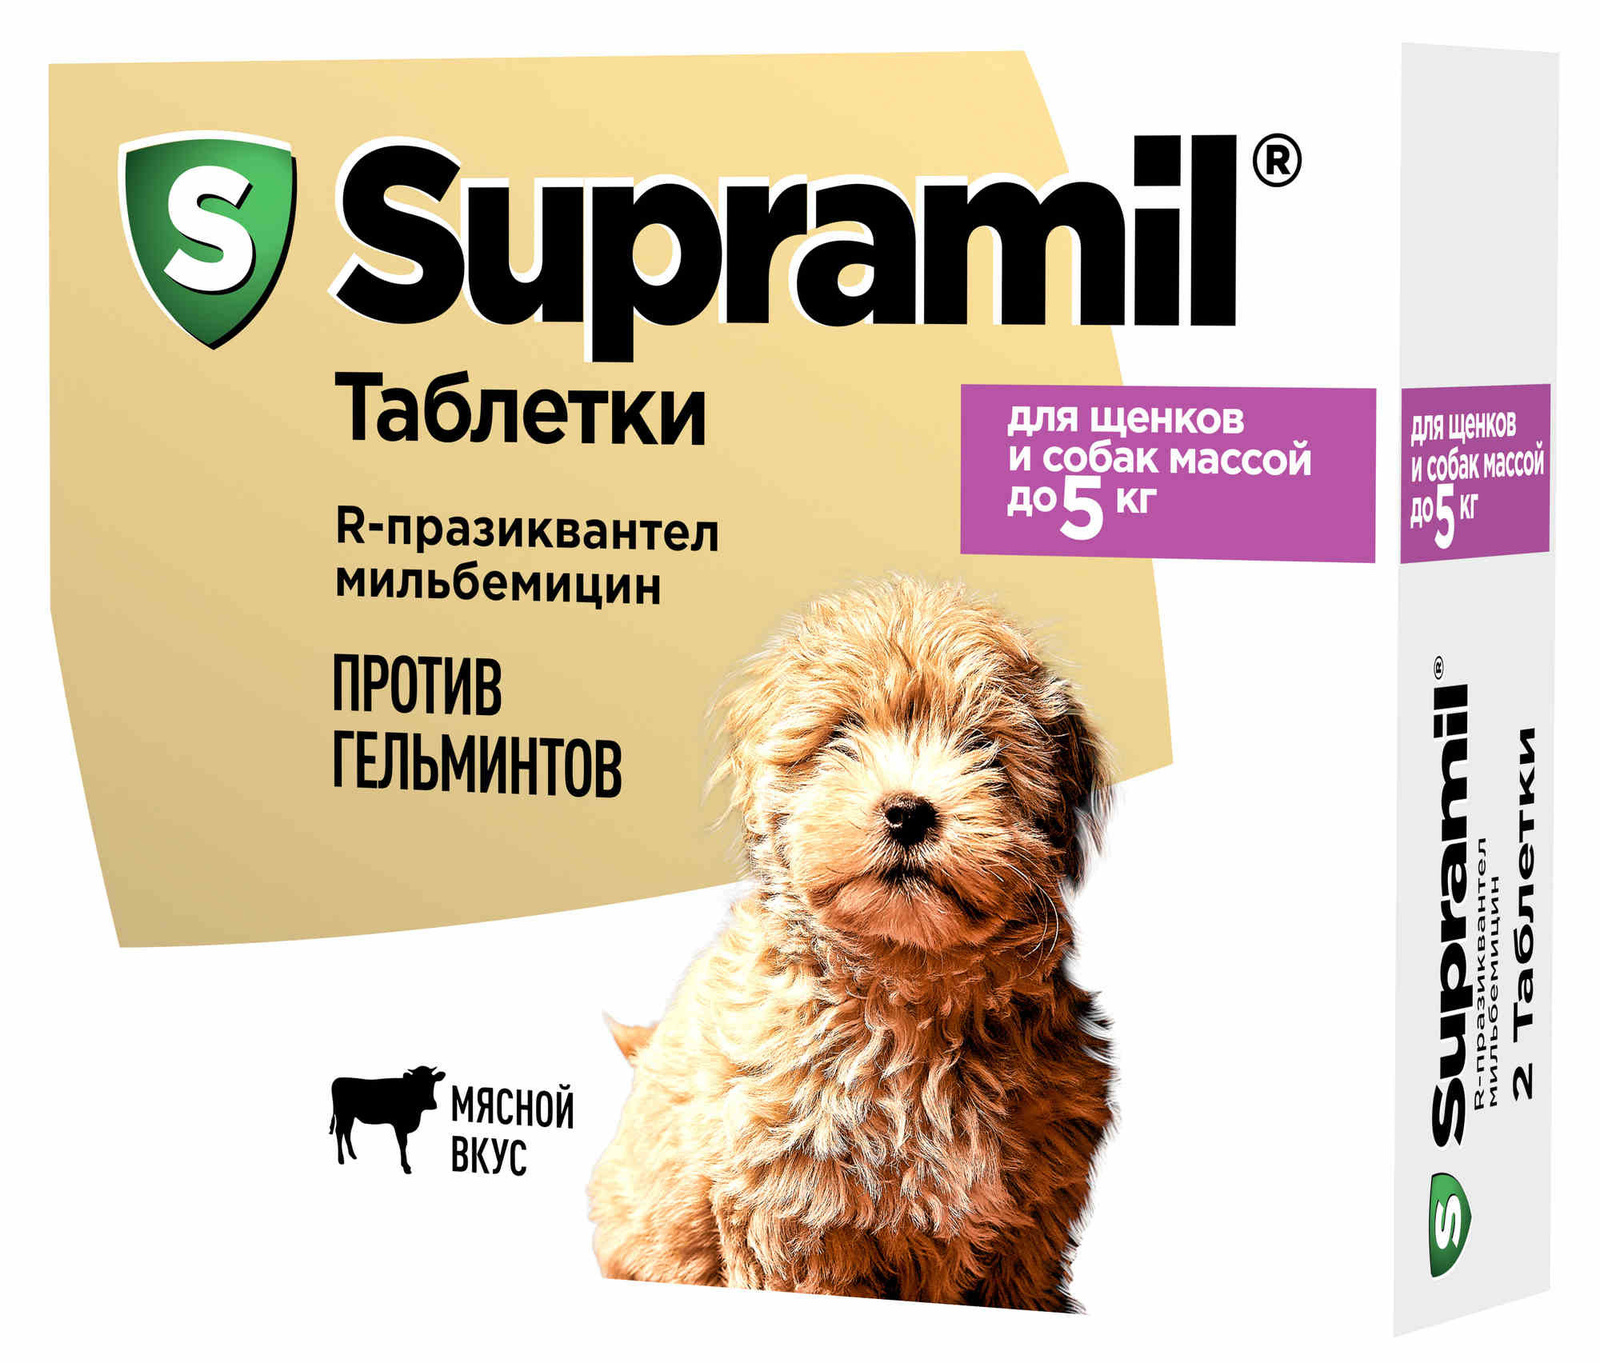 Астрафарм Астрафарм антигельминтный препарат Supramil для щенков и собак массой до 5 кг, таблетки (20 г) астрафарм астрафарм супрамил эмульсия для щенков и собак от 10 до 25 кг 71 г